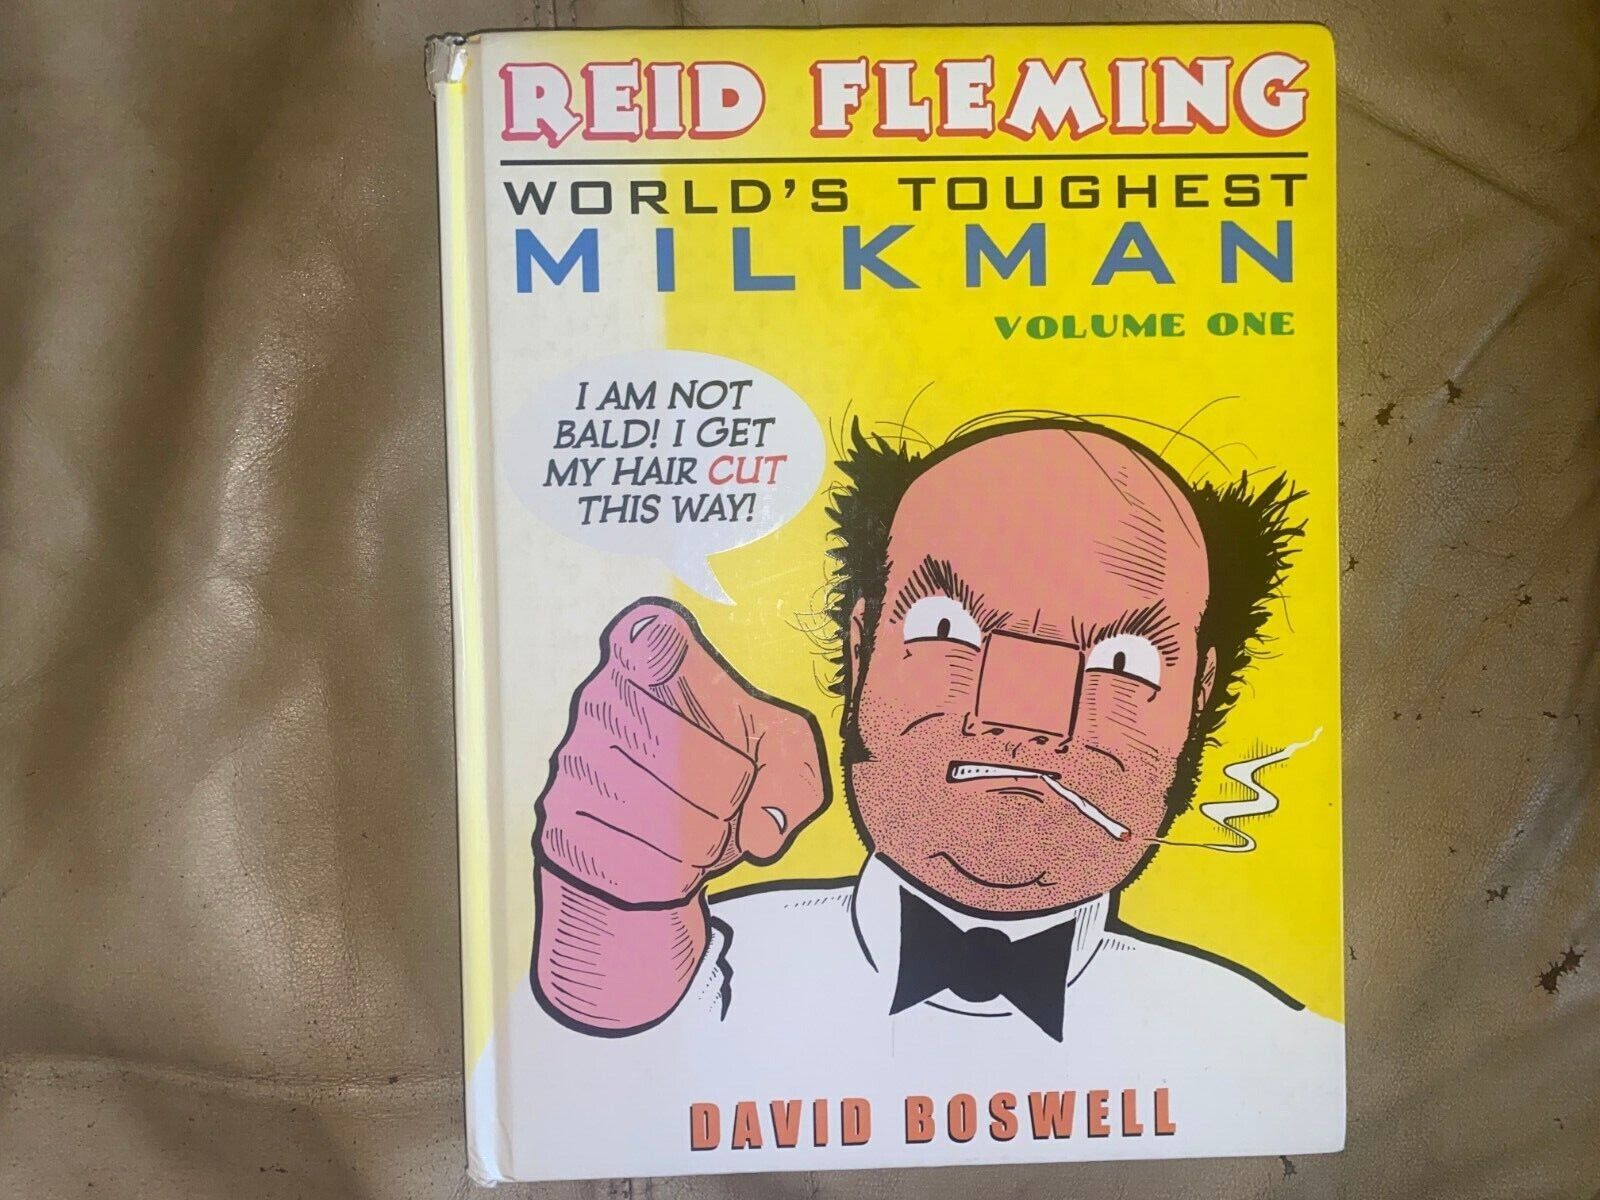 Reid Fleming, World's Toughest Milkman: Vol 1 by Boswell. IDW Publishing, 2011 H